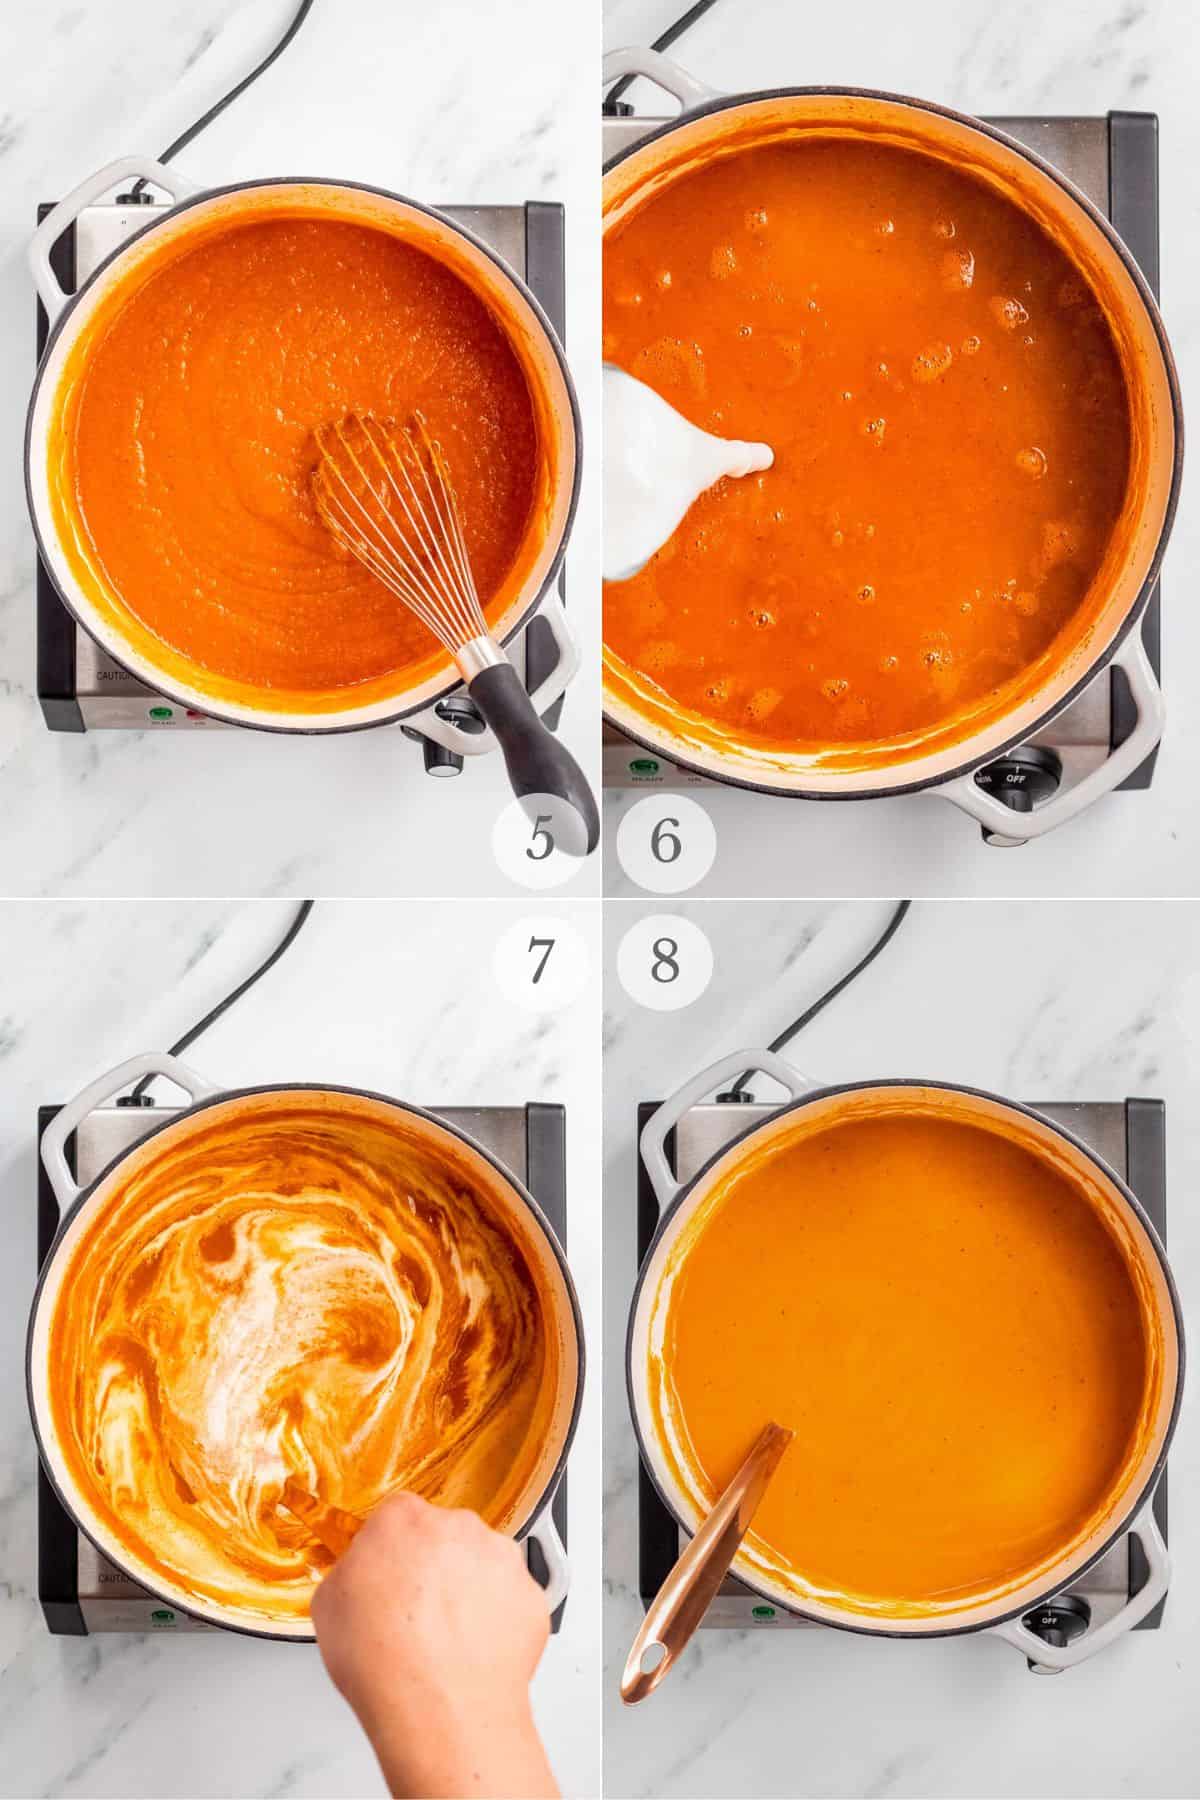 pumpkin curry soup recipe steps 5-8.